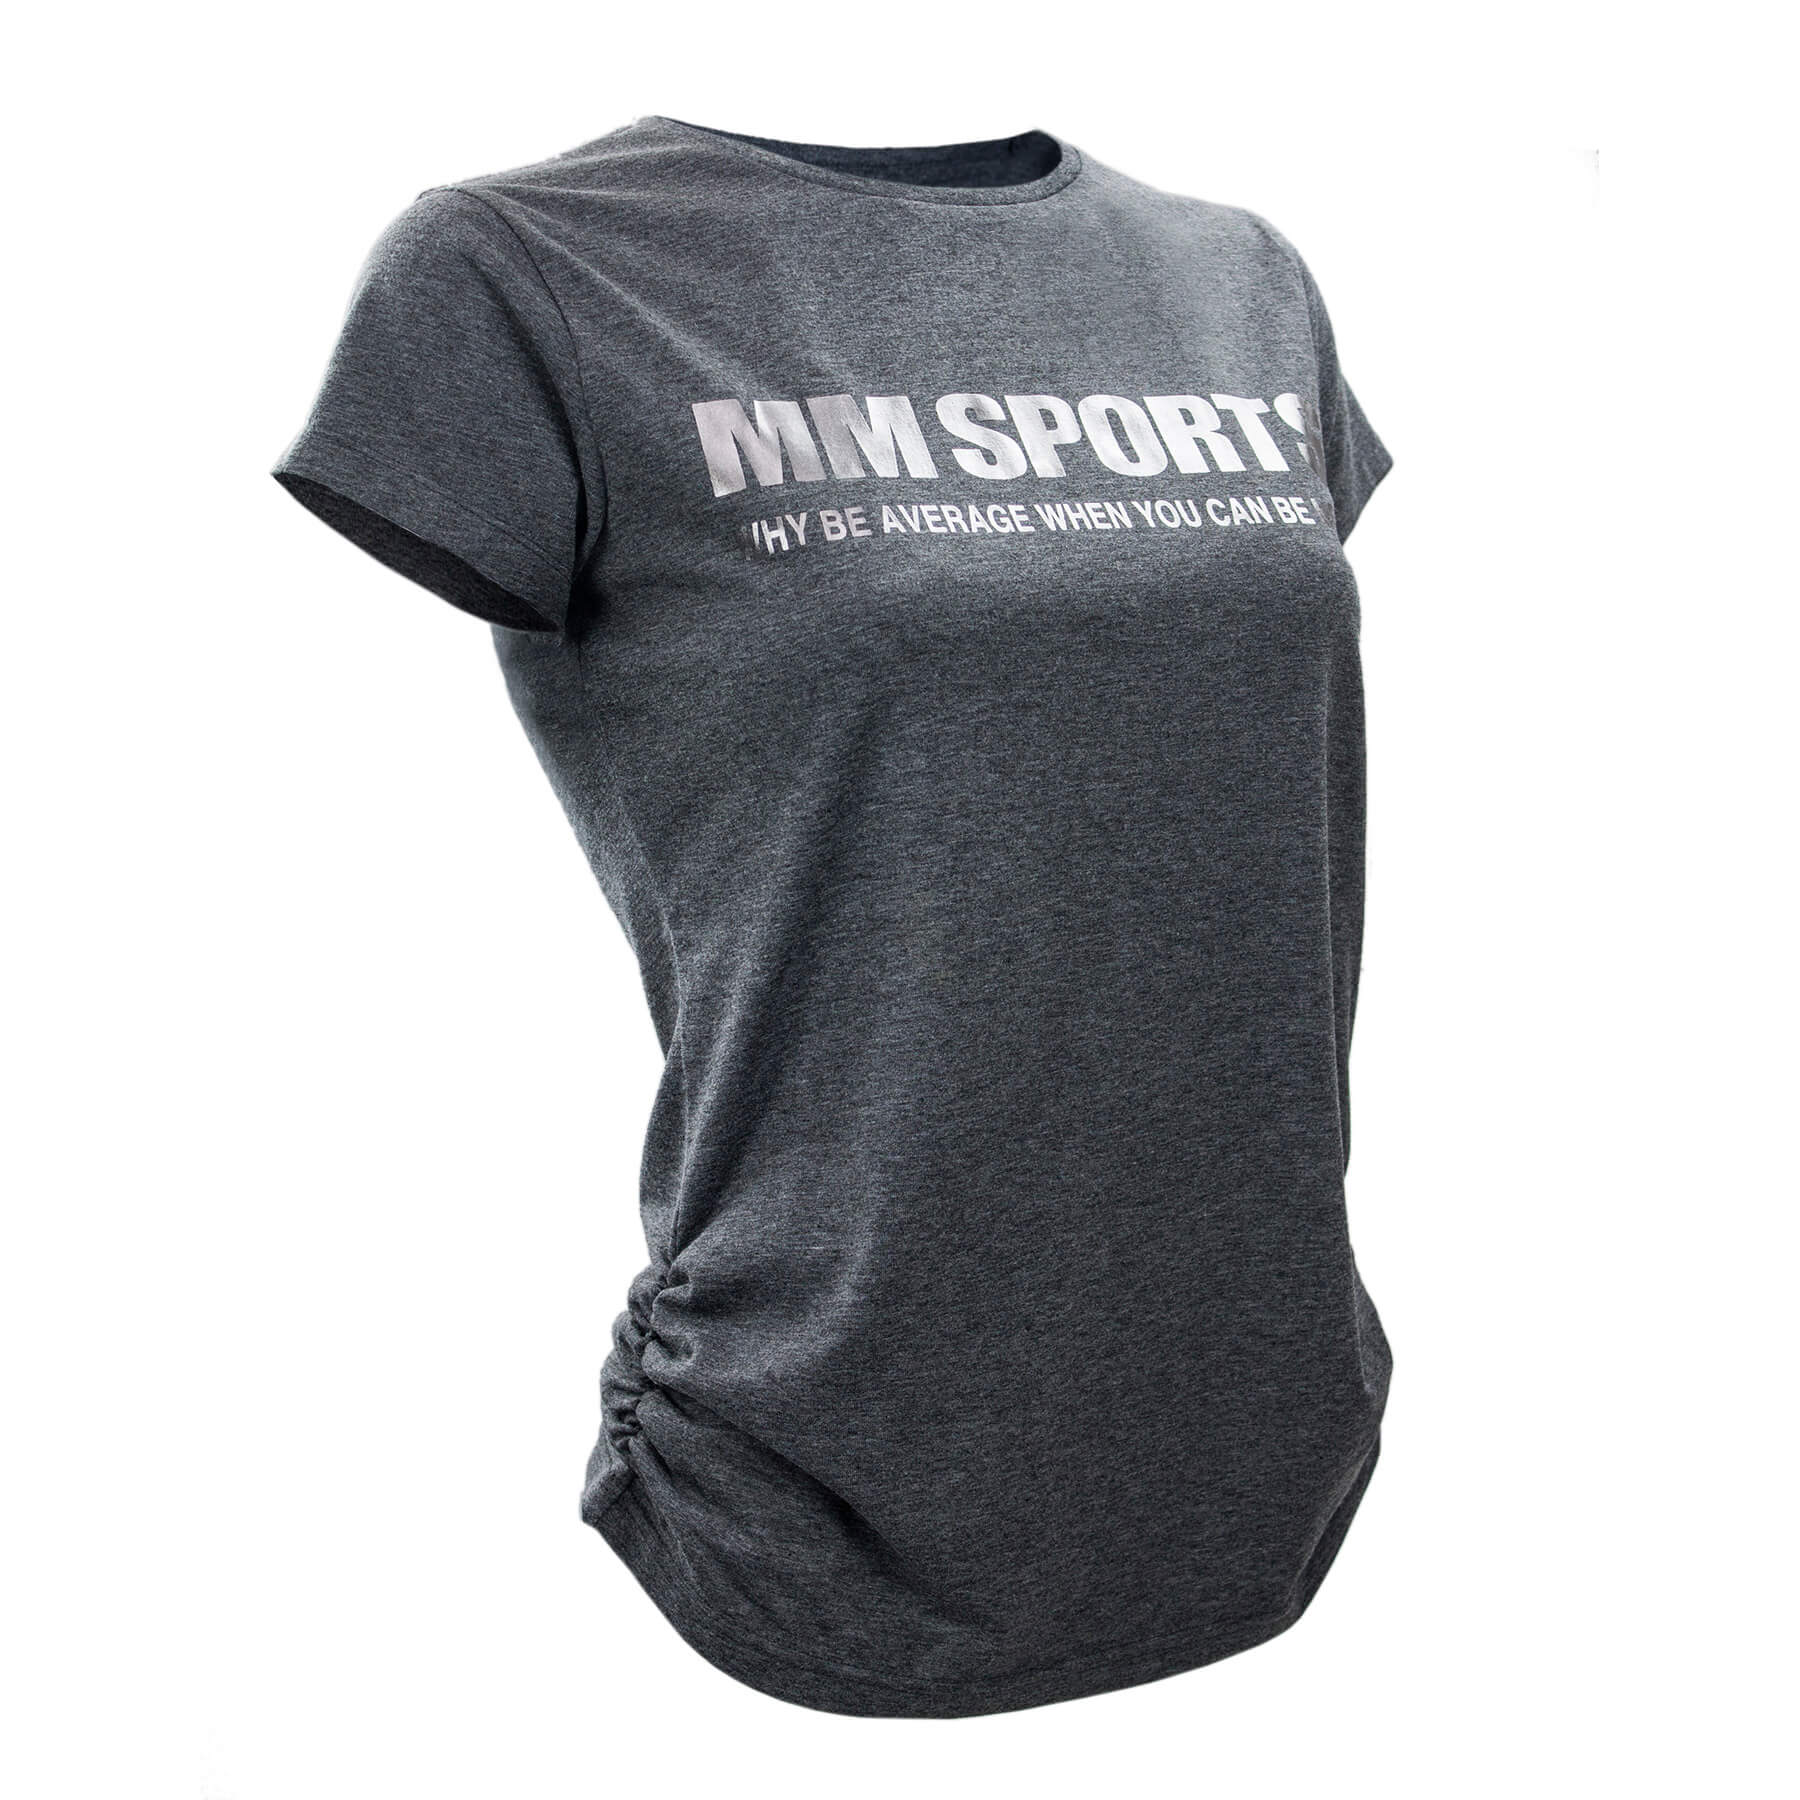 T-shirt Dam – MM Sports Tee Tundra - Dark Greymelange, L - Träningskläder